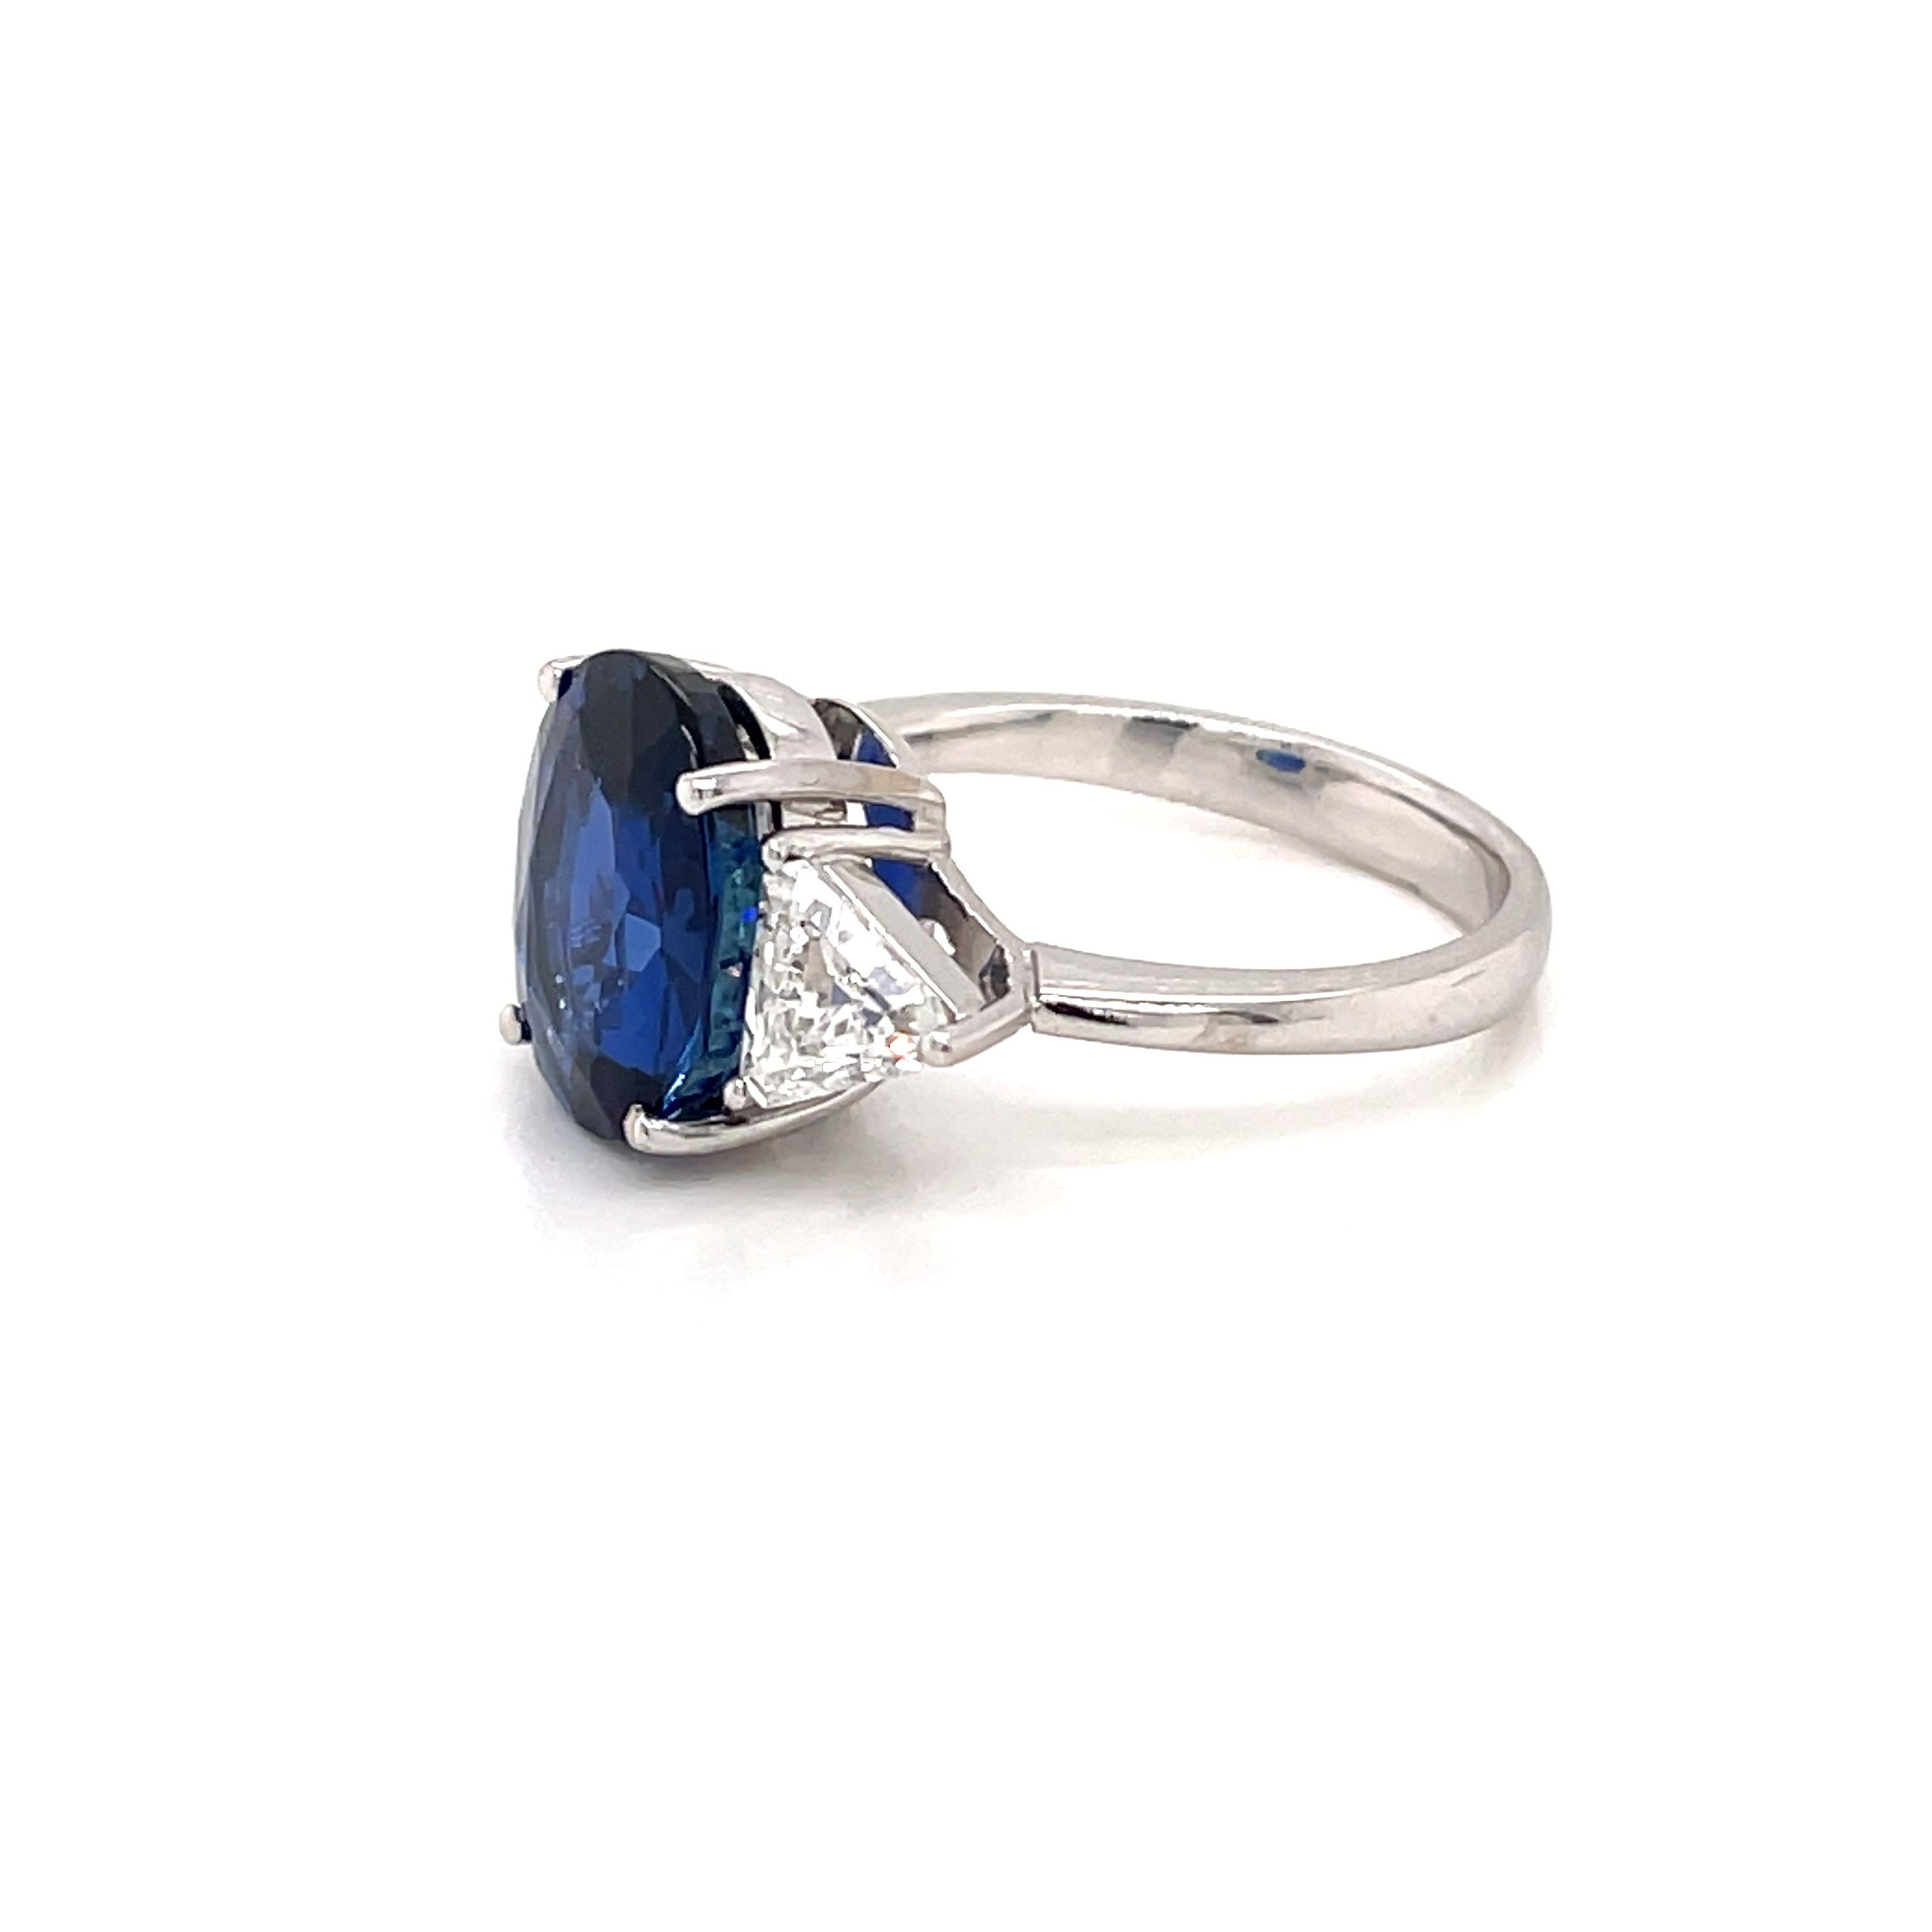 Vintage Certified 6 Carat Unheated Burma Sapphire Diamond Engagement Ring 4